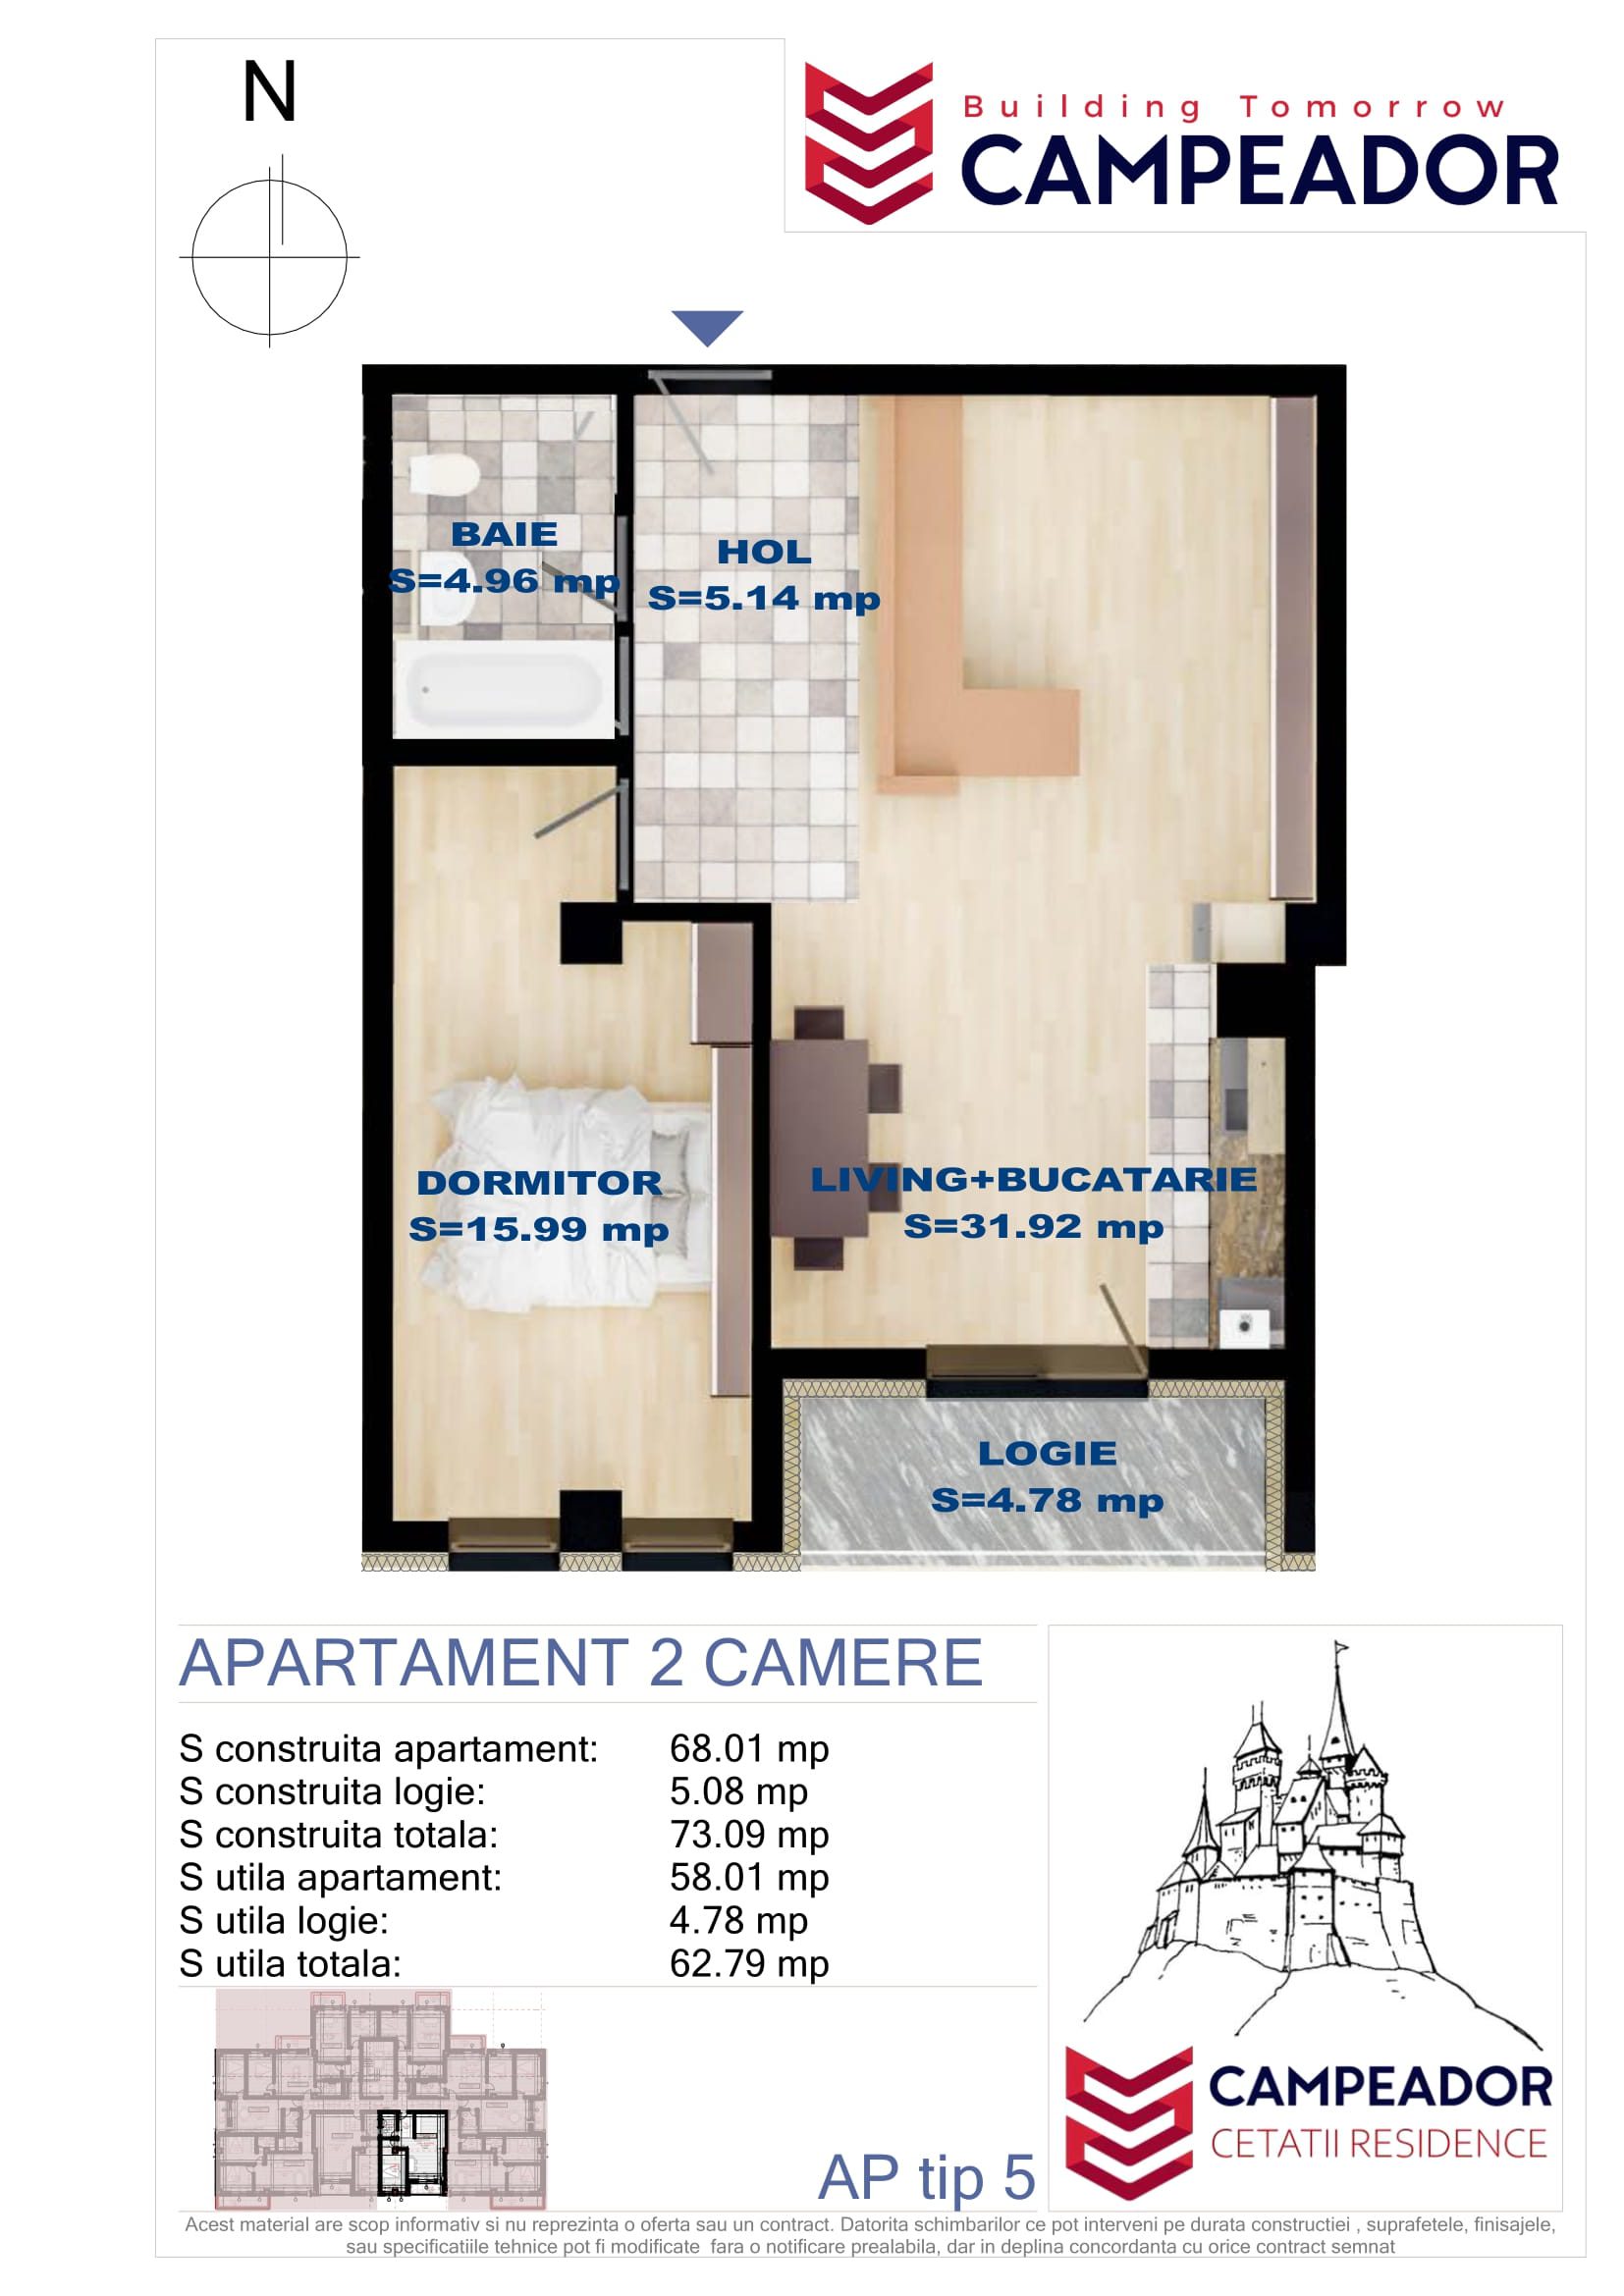 APARTAMENT TIP 5 - Campeador Cetatii Residence